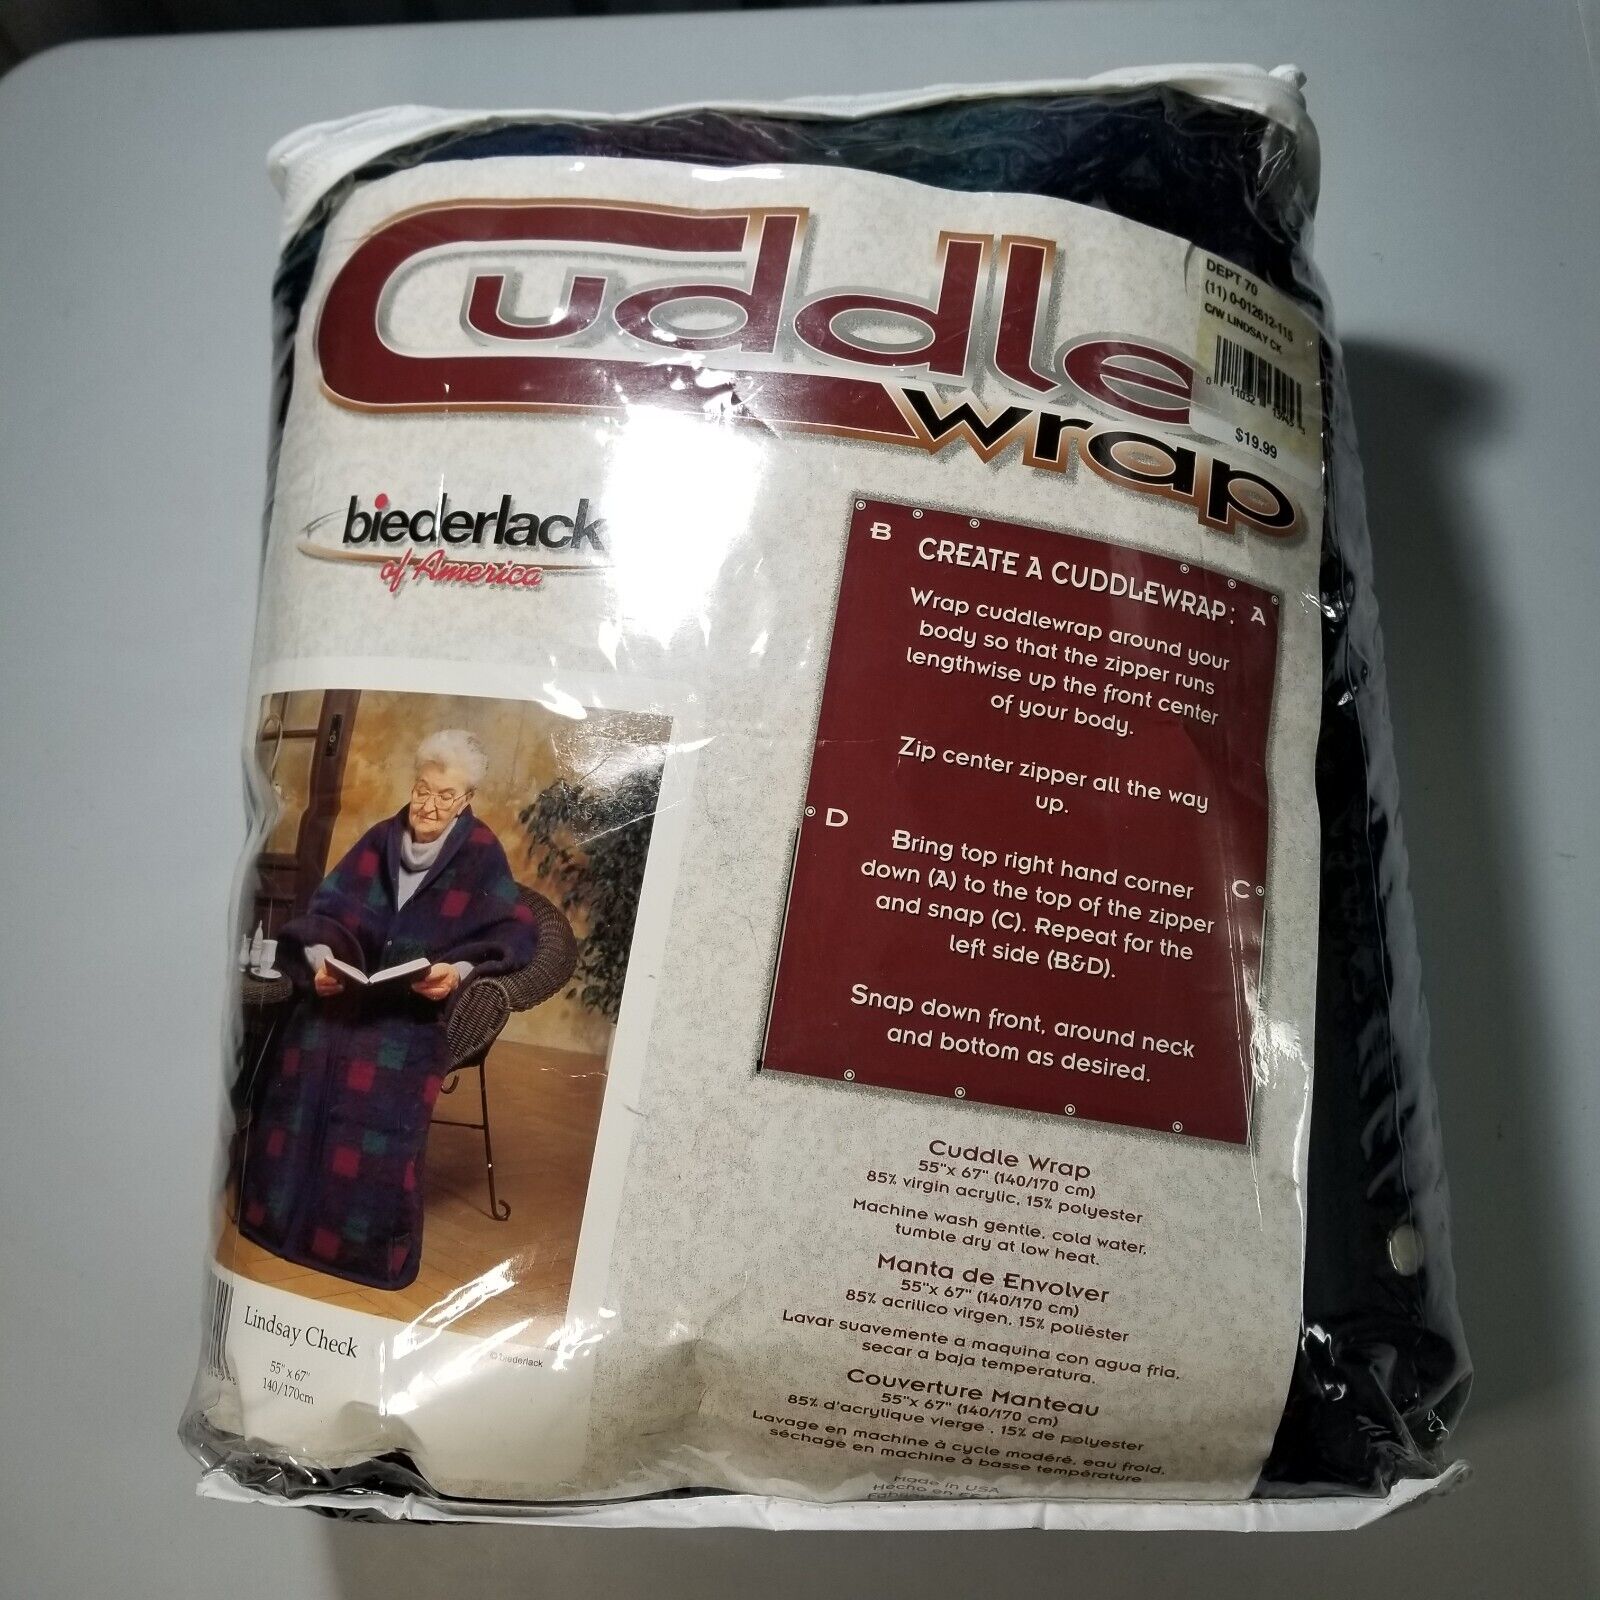 Vintage Biederlack Cuddle Wrap 55X67 Lindsay Check Grandmacore